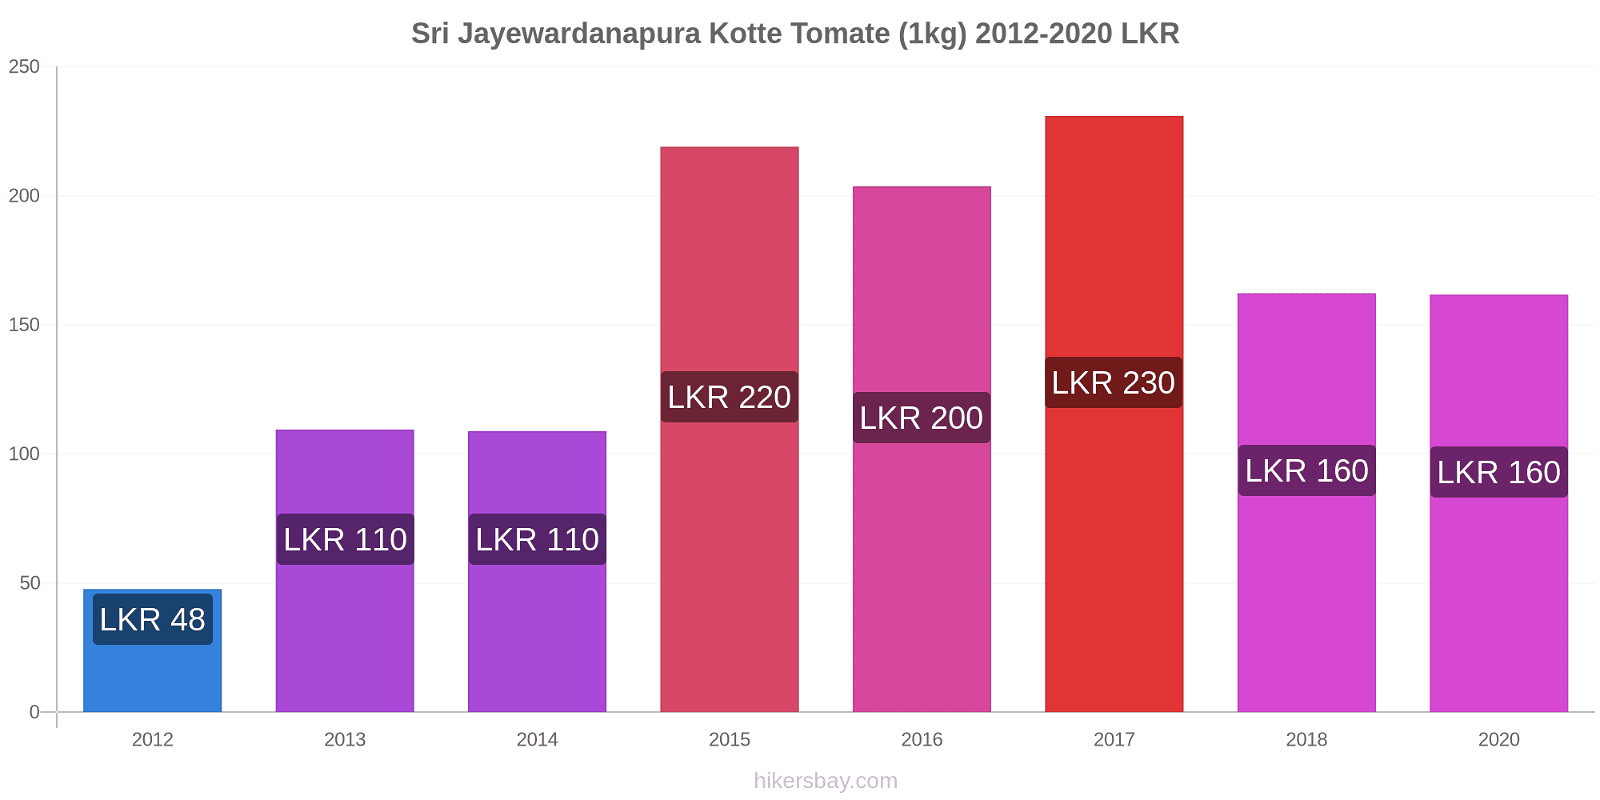 Sri Jayewardanapura Kotte modificări de preț Tomate (1kg) hikersbay.com